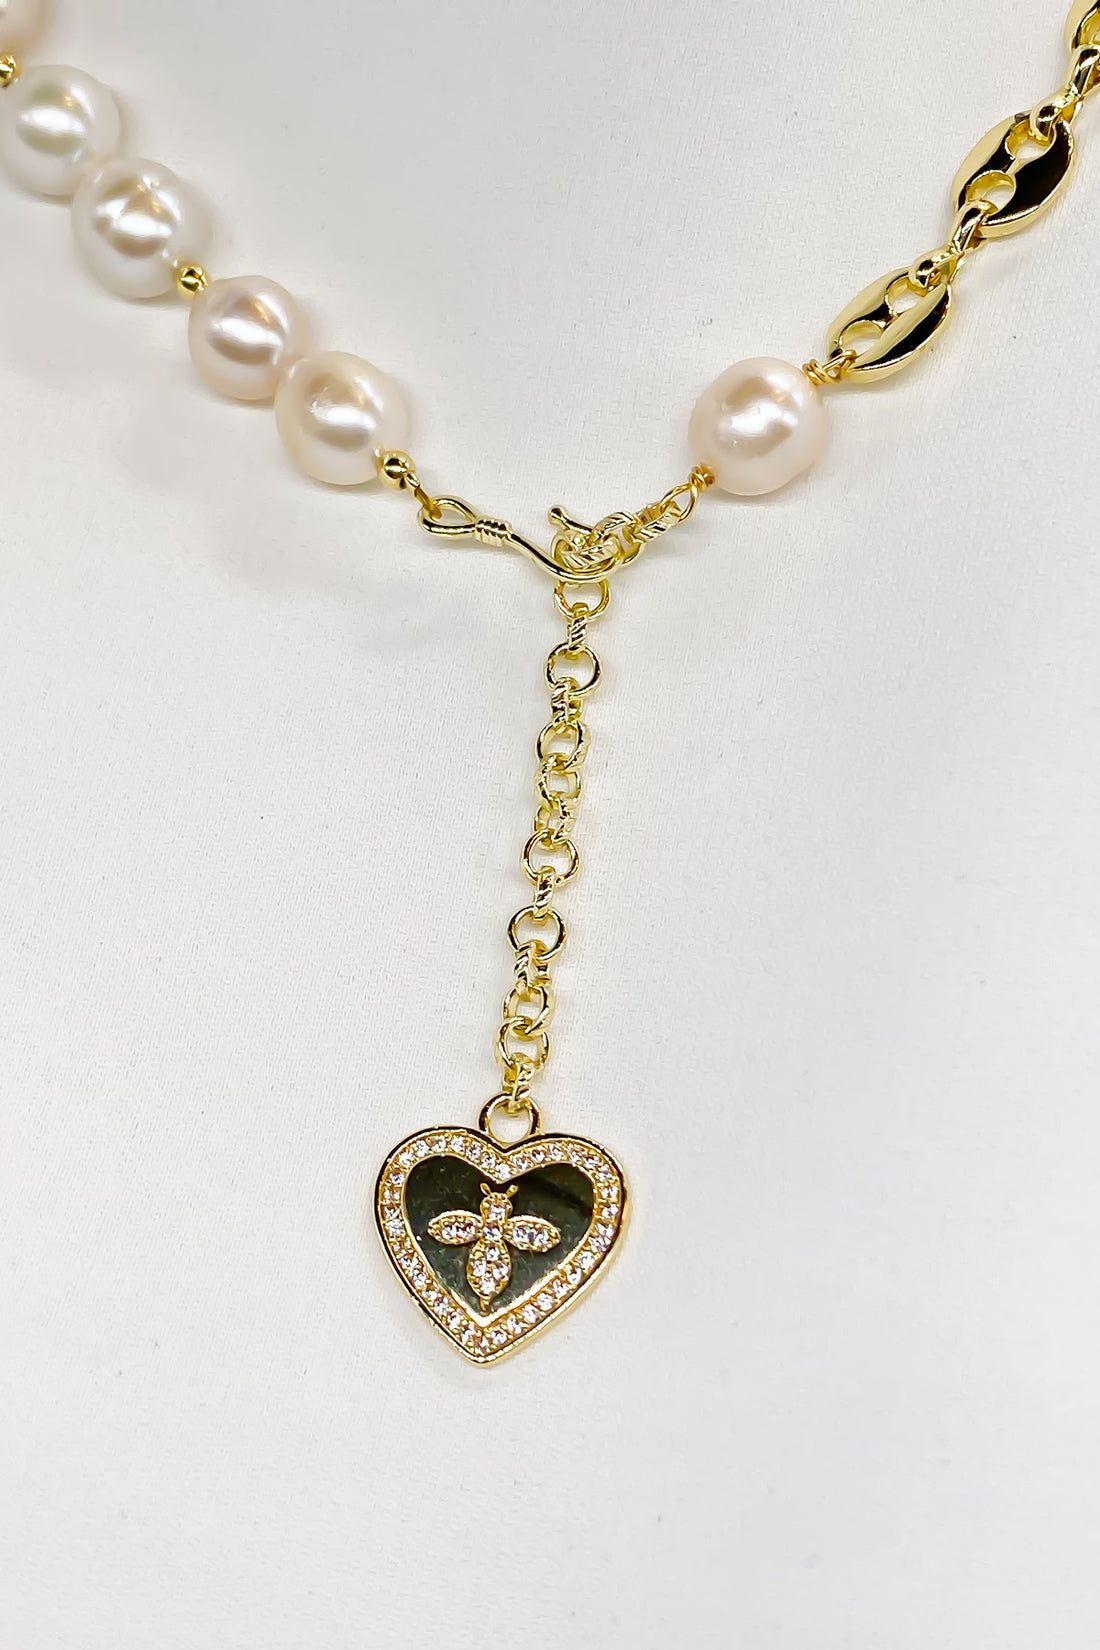 SKYE San Francisco Shop Chic Modern Elegant Classy Women Jewelry French Parisian Minimalist Bellamy Crystal Bee Heart Pendant Pearl Necklace 6